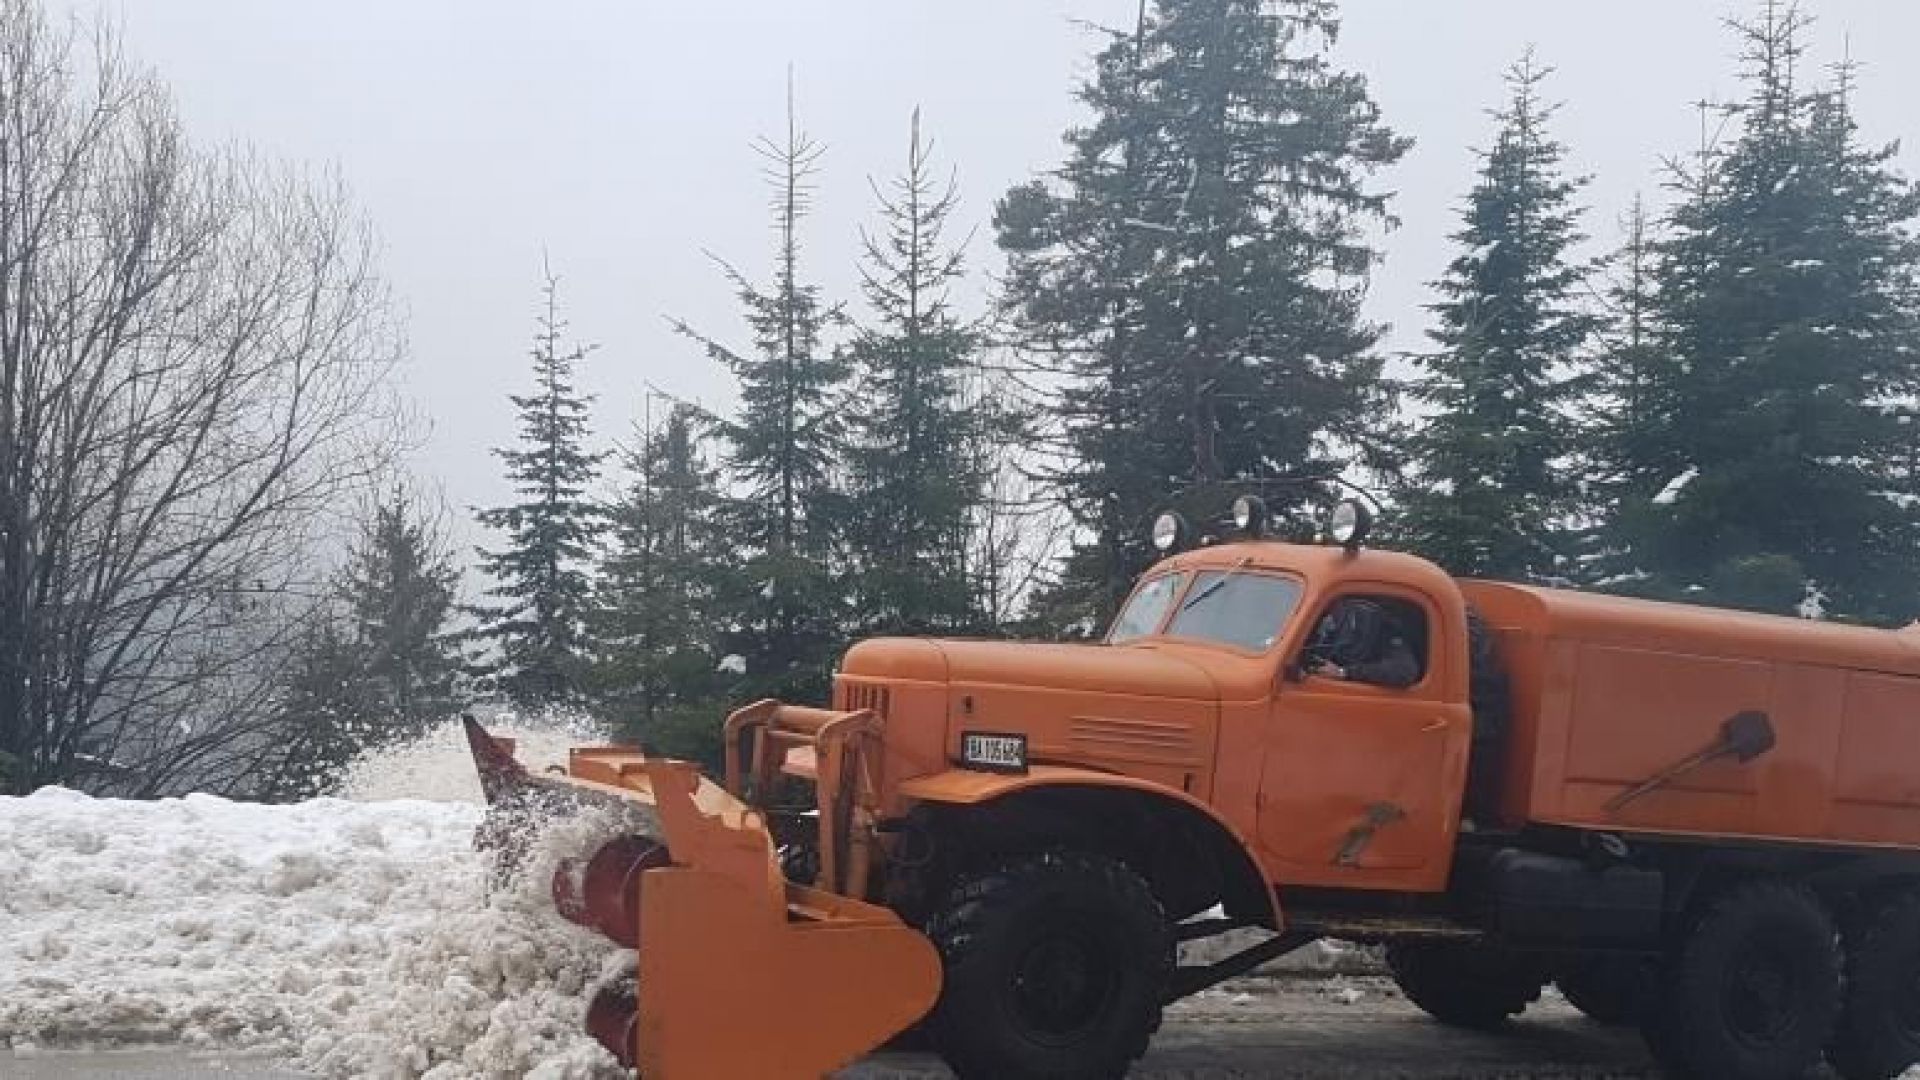 60 см сняг затвори прохода Превала, военни помагат в чистенето